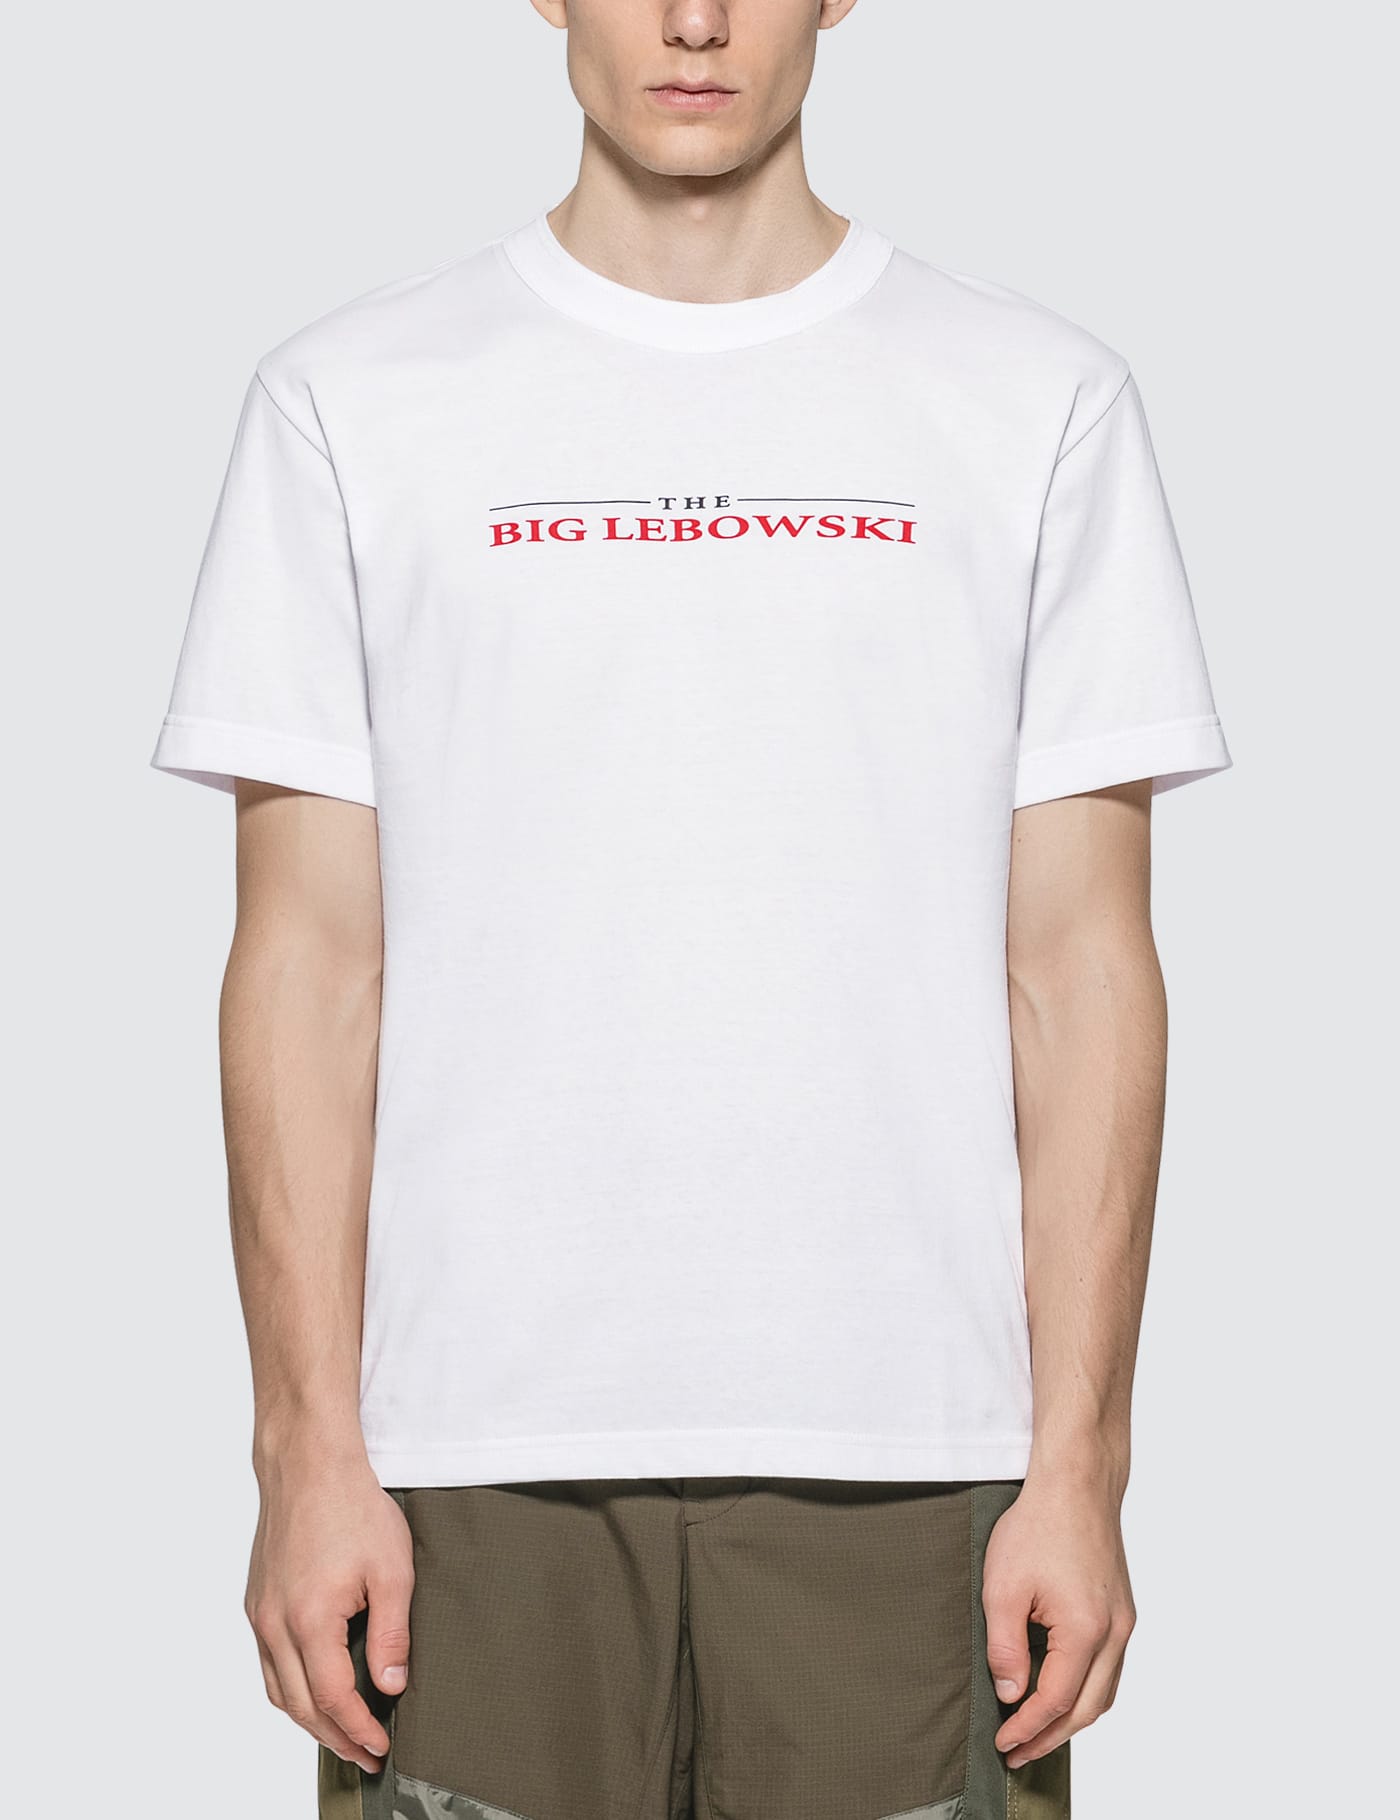 sacai x THE BIG LEBOWSKI tシャツ